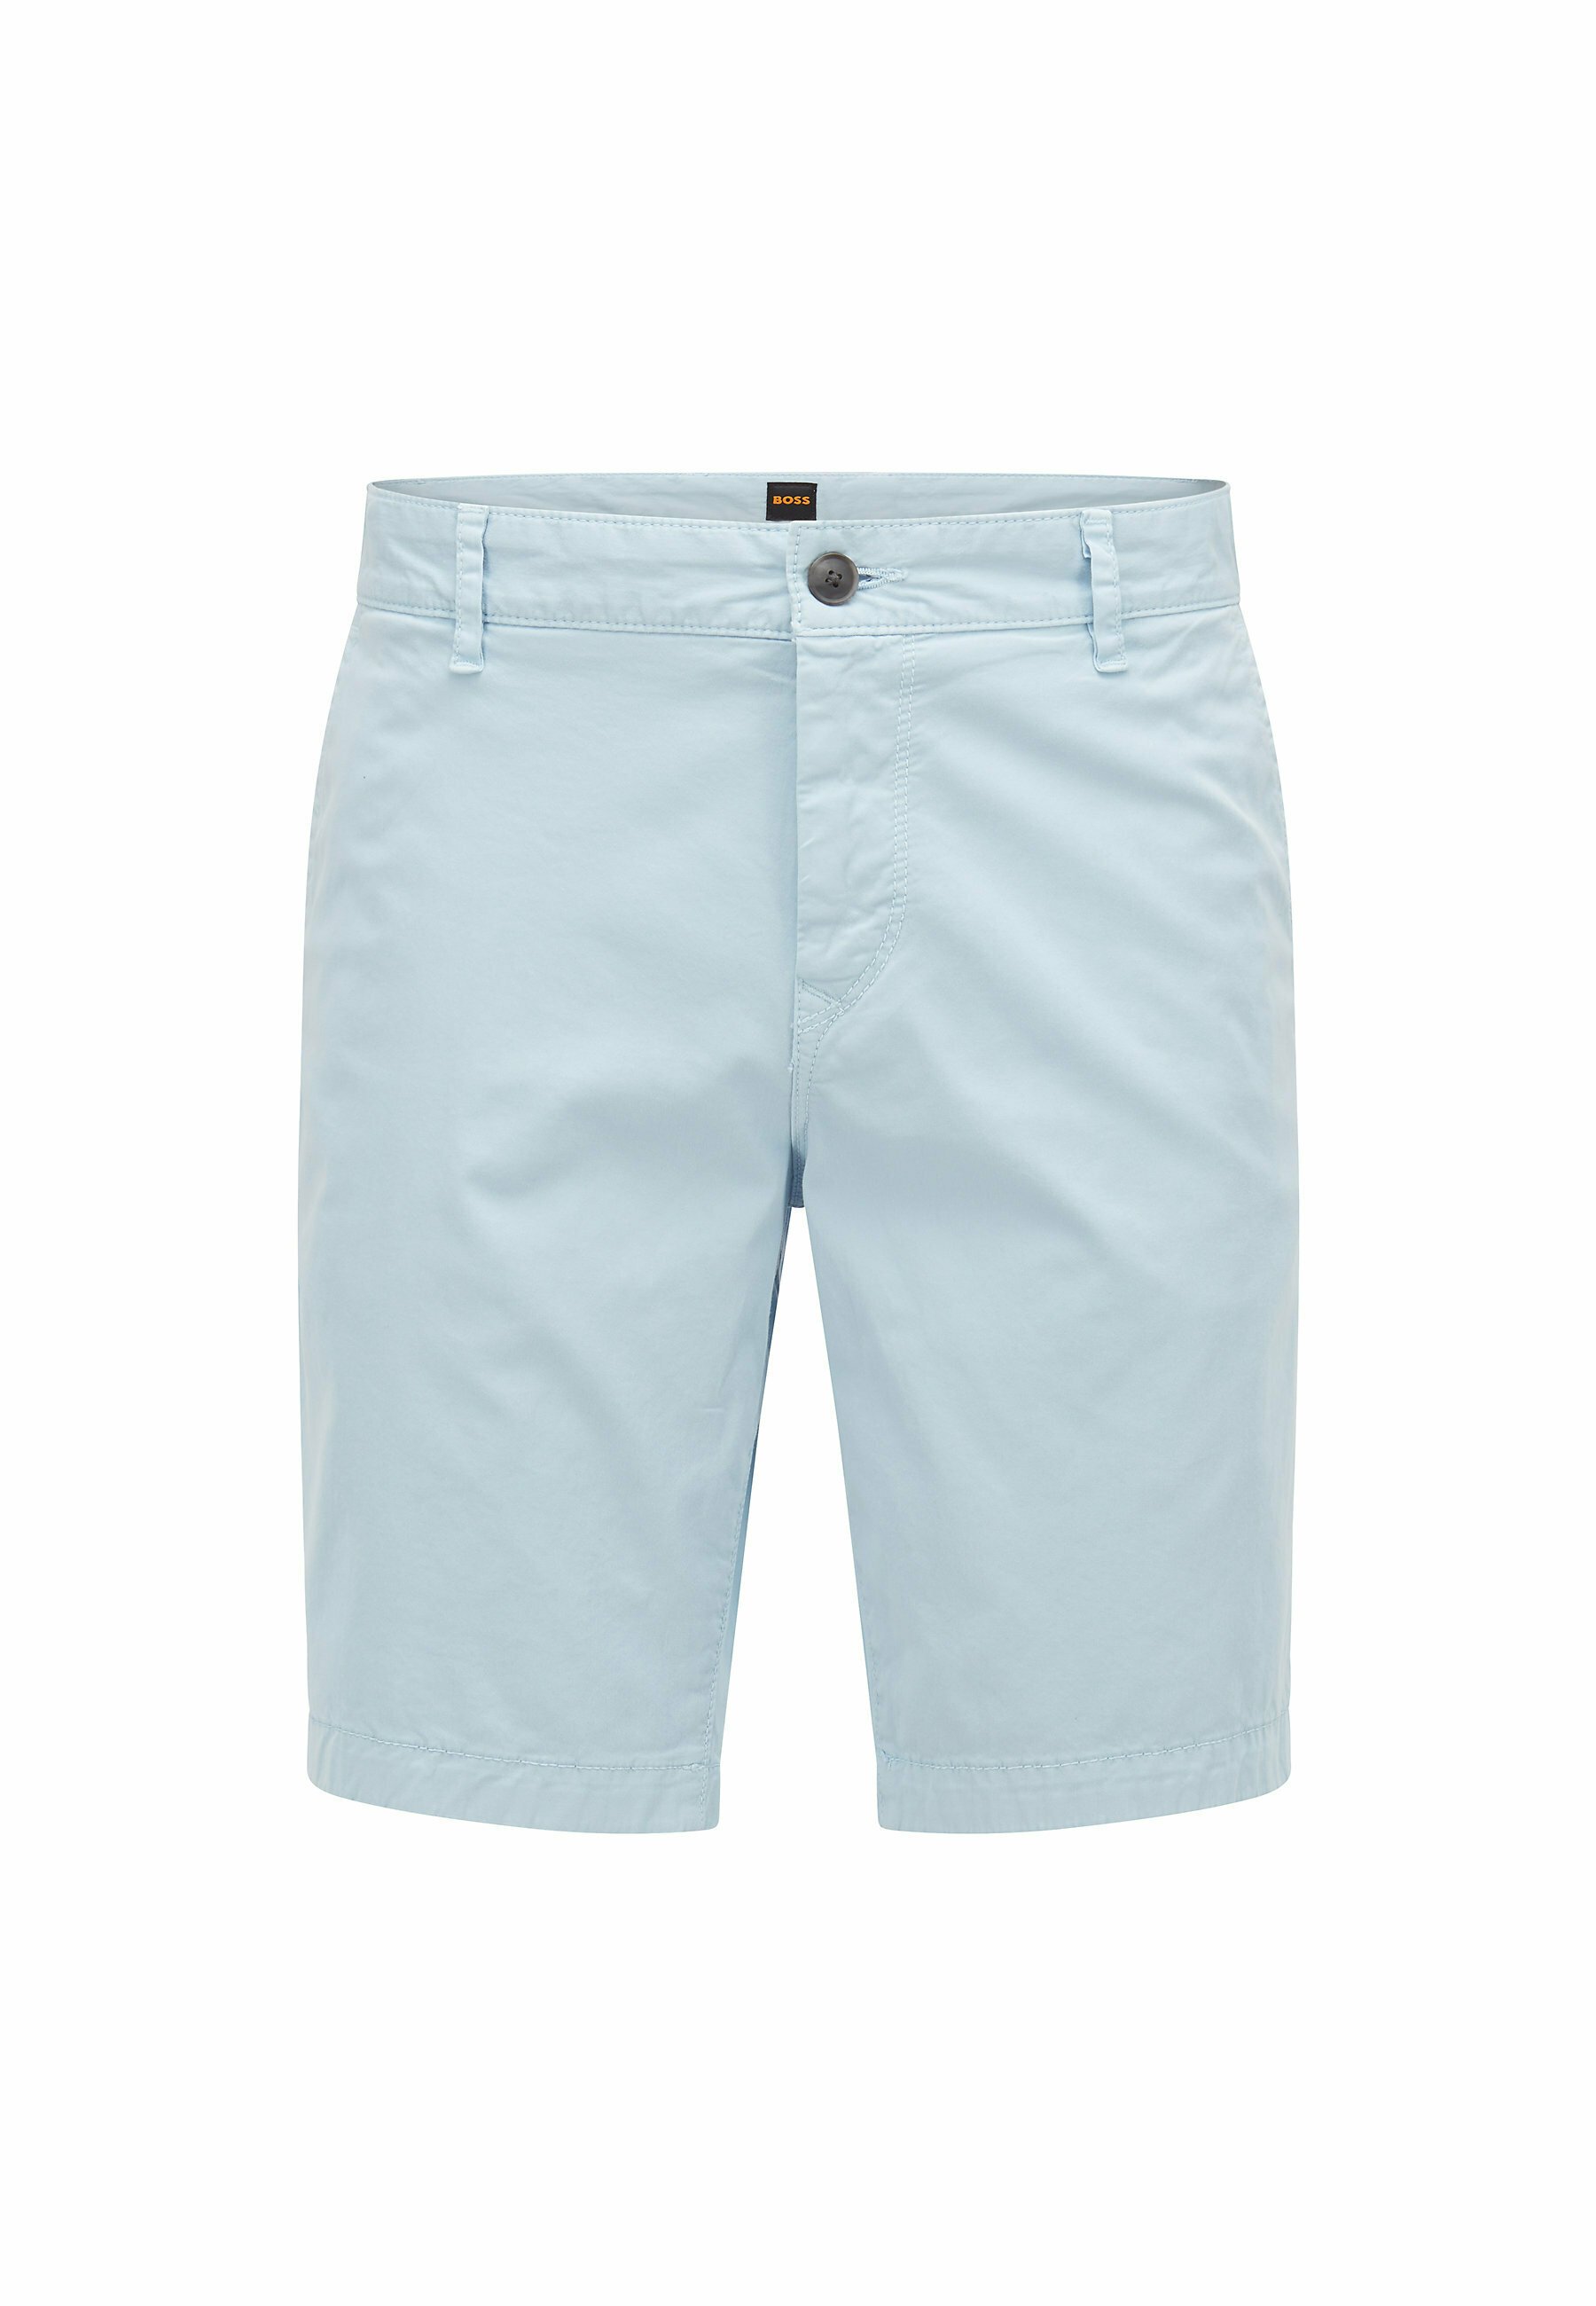 BOSS SCHINO SLIM - Shorts - open blue/blau